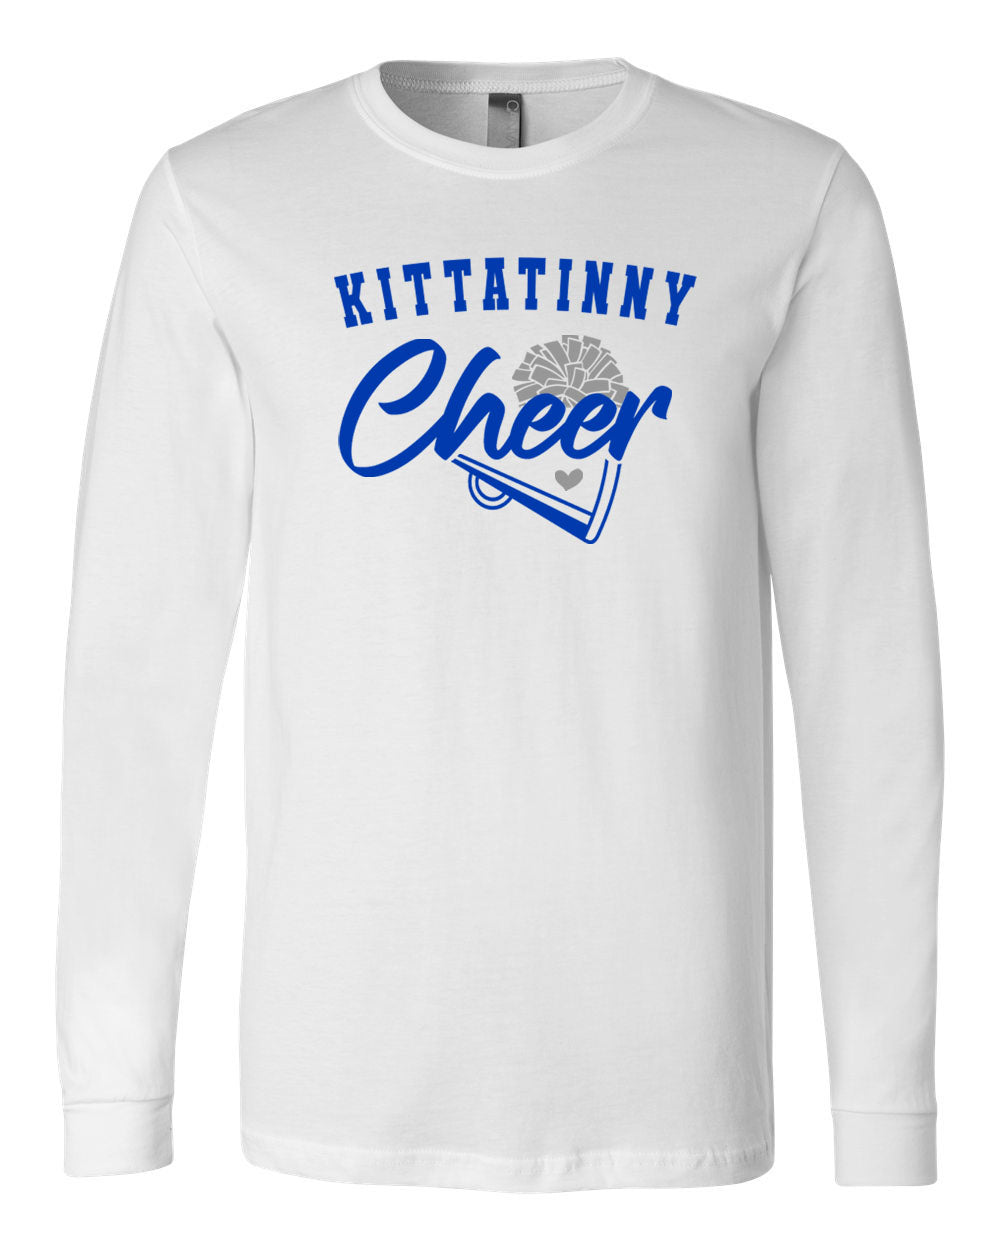 Kittatinny Cheer Design 9 Long Sleeve Shirt